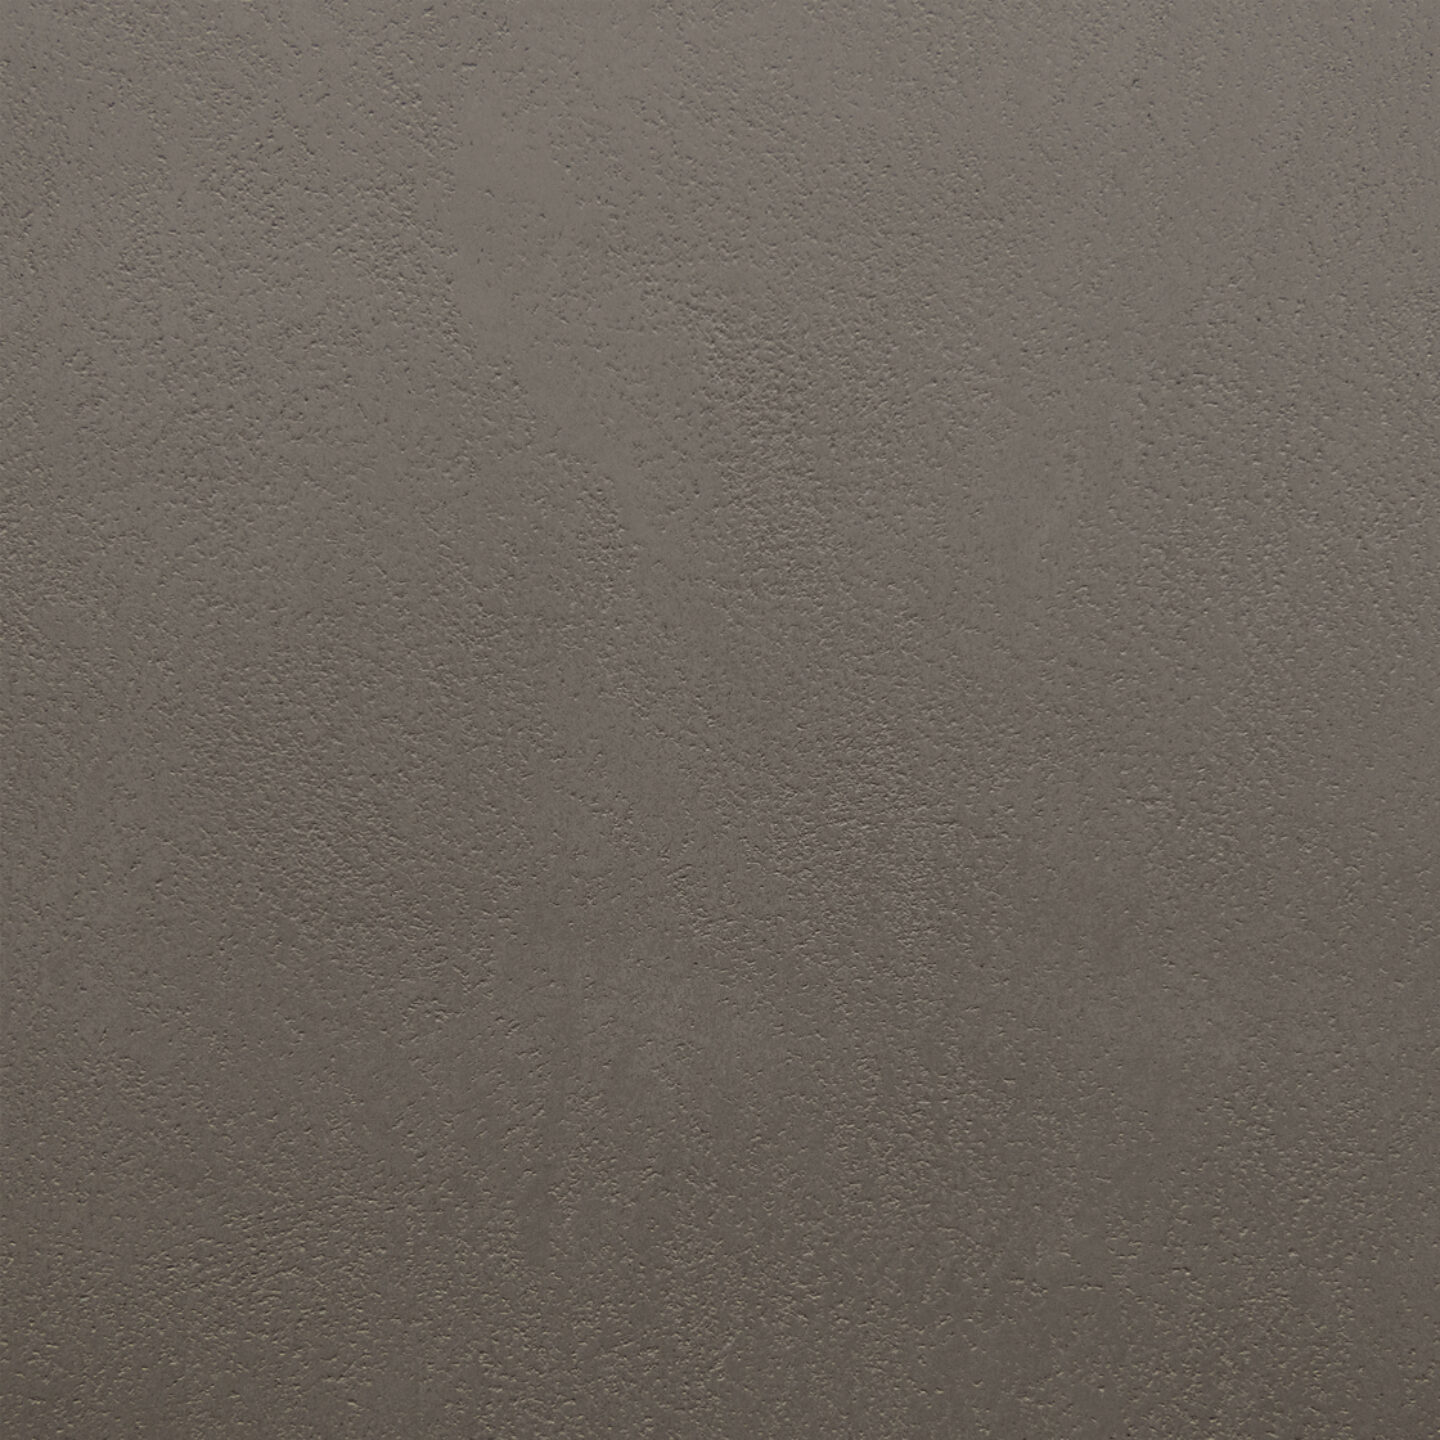 Close up of Armourcoat leatherstone exterior polished plaster finish - 38